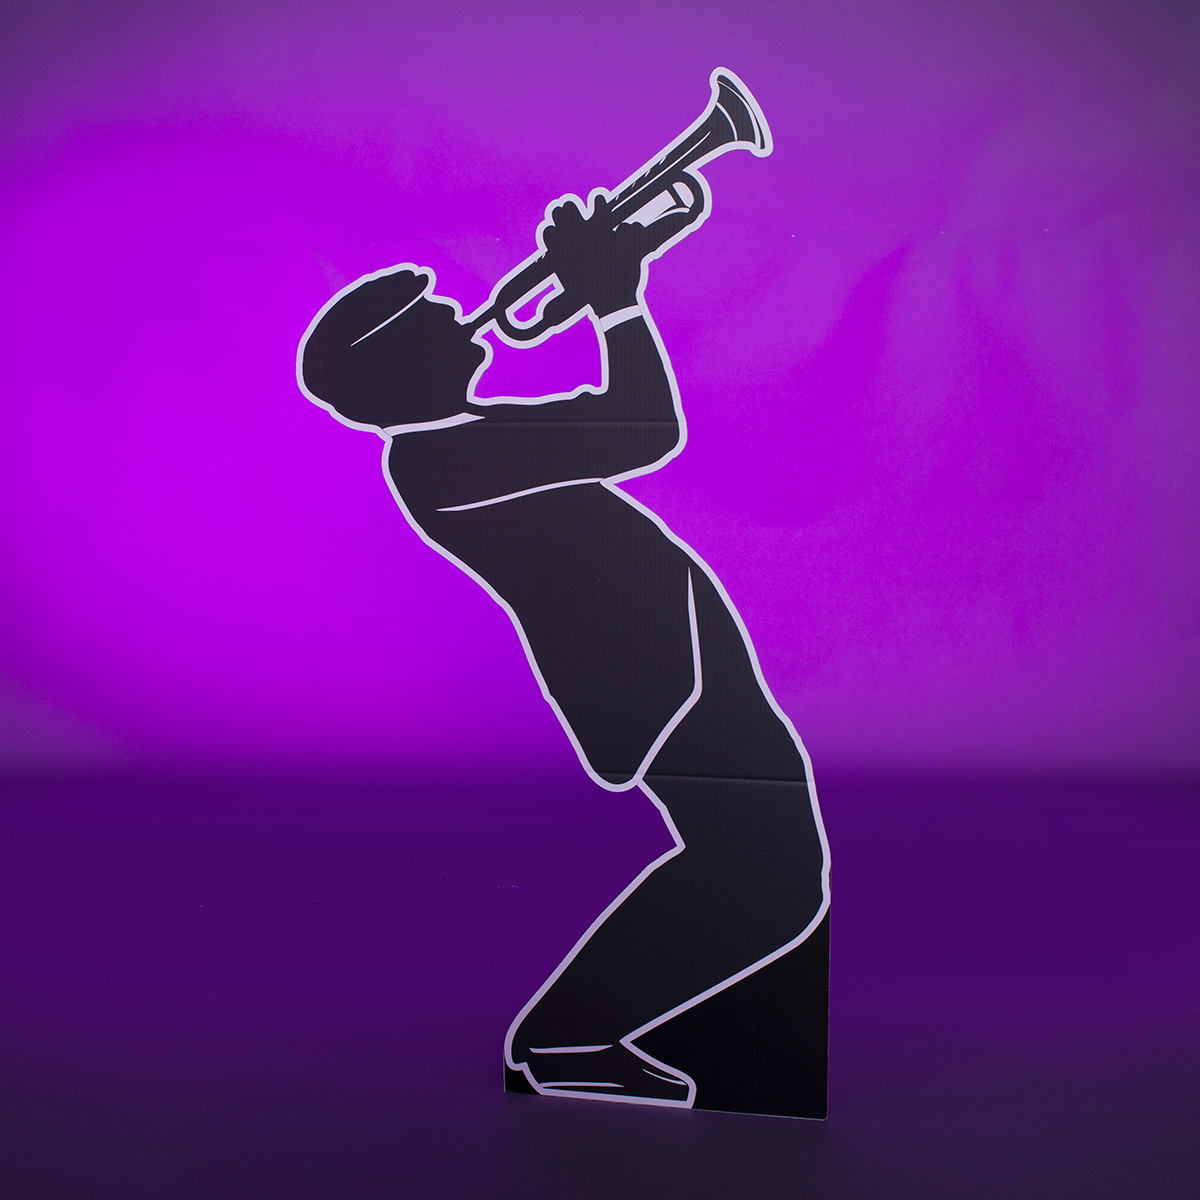 Trumpet Player Silhouette Kit